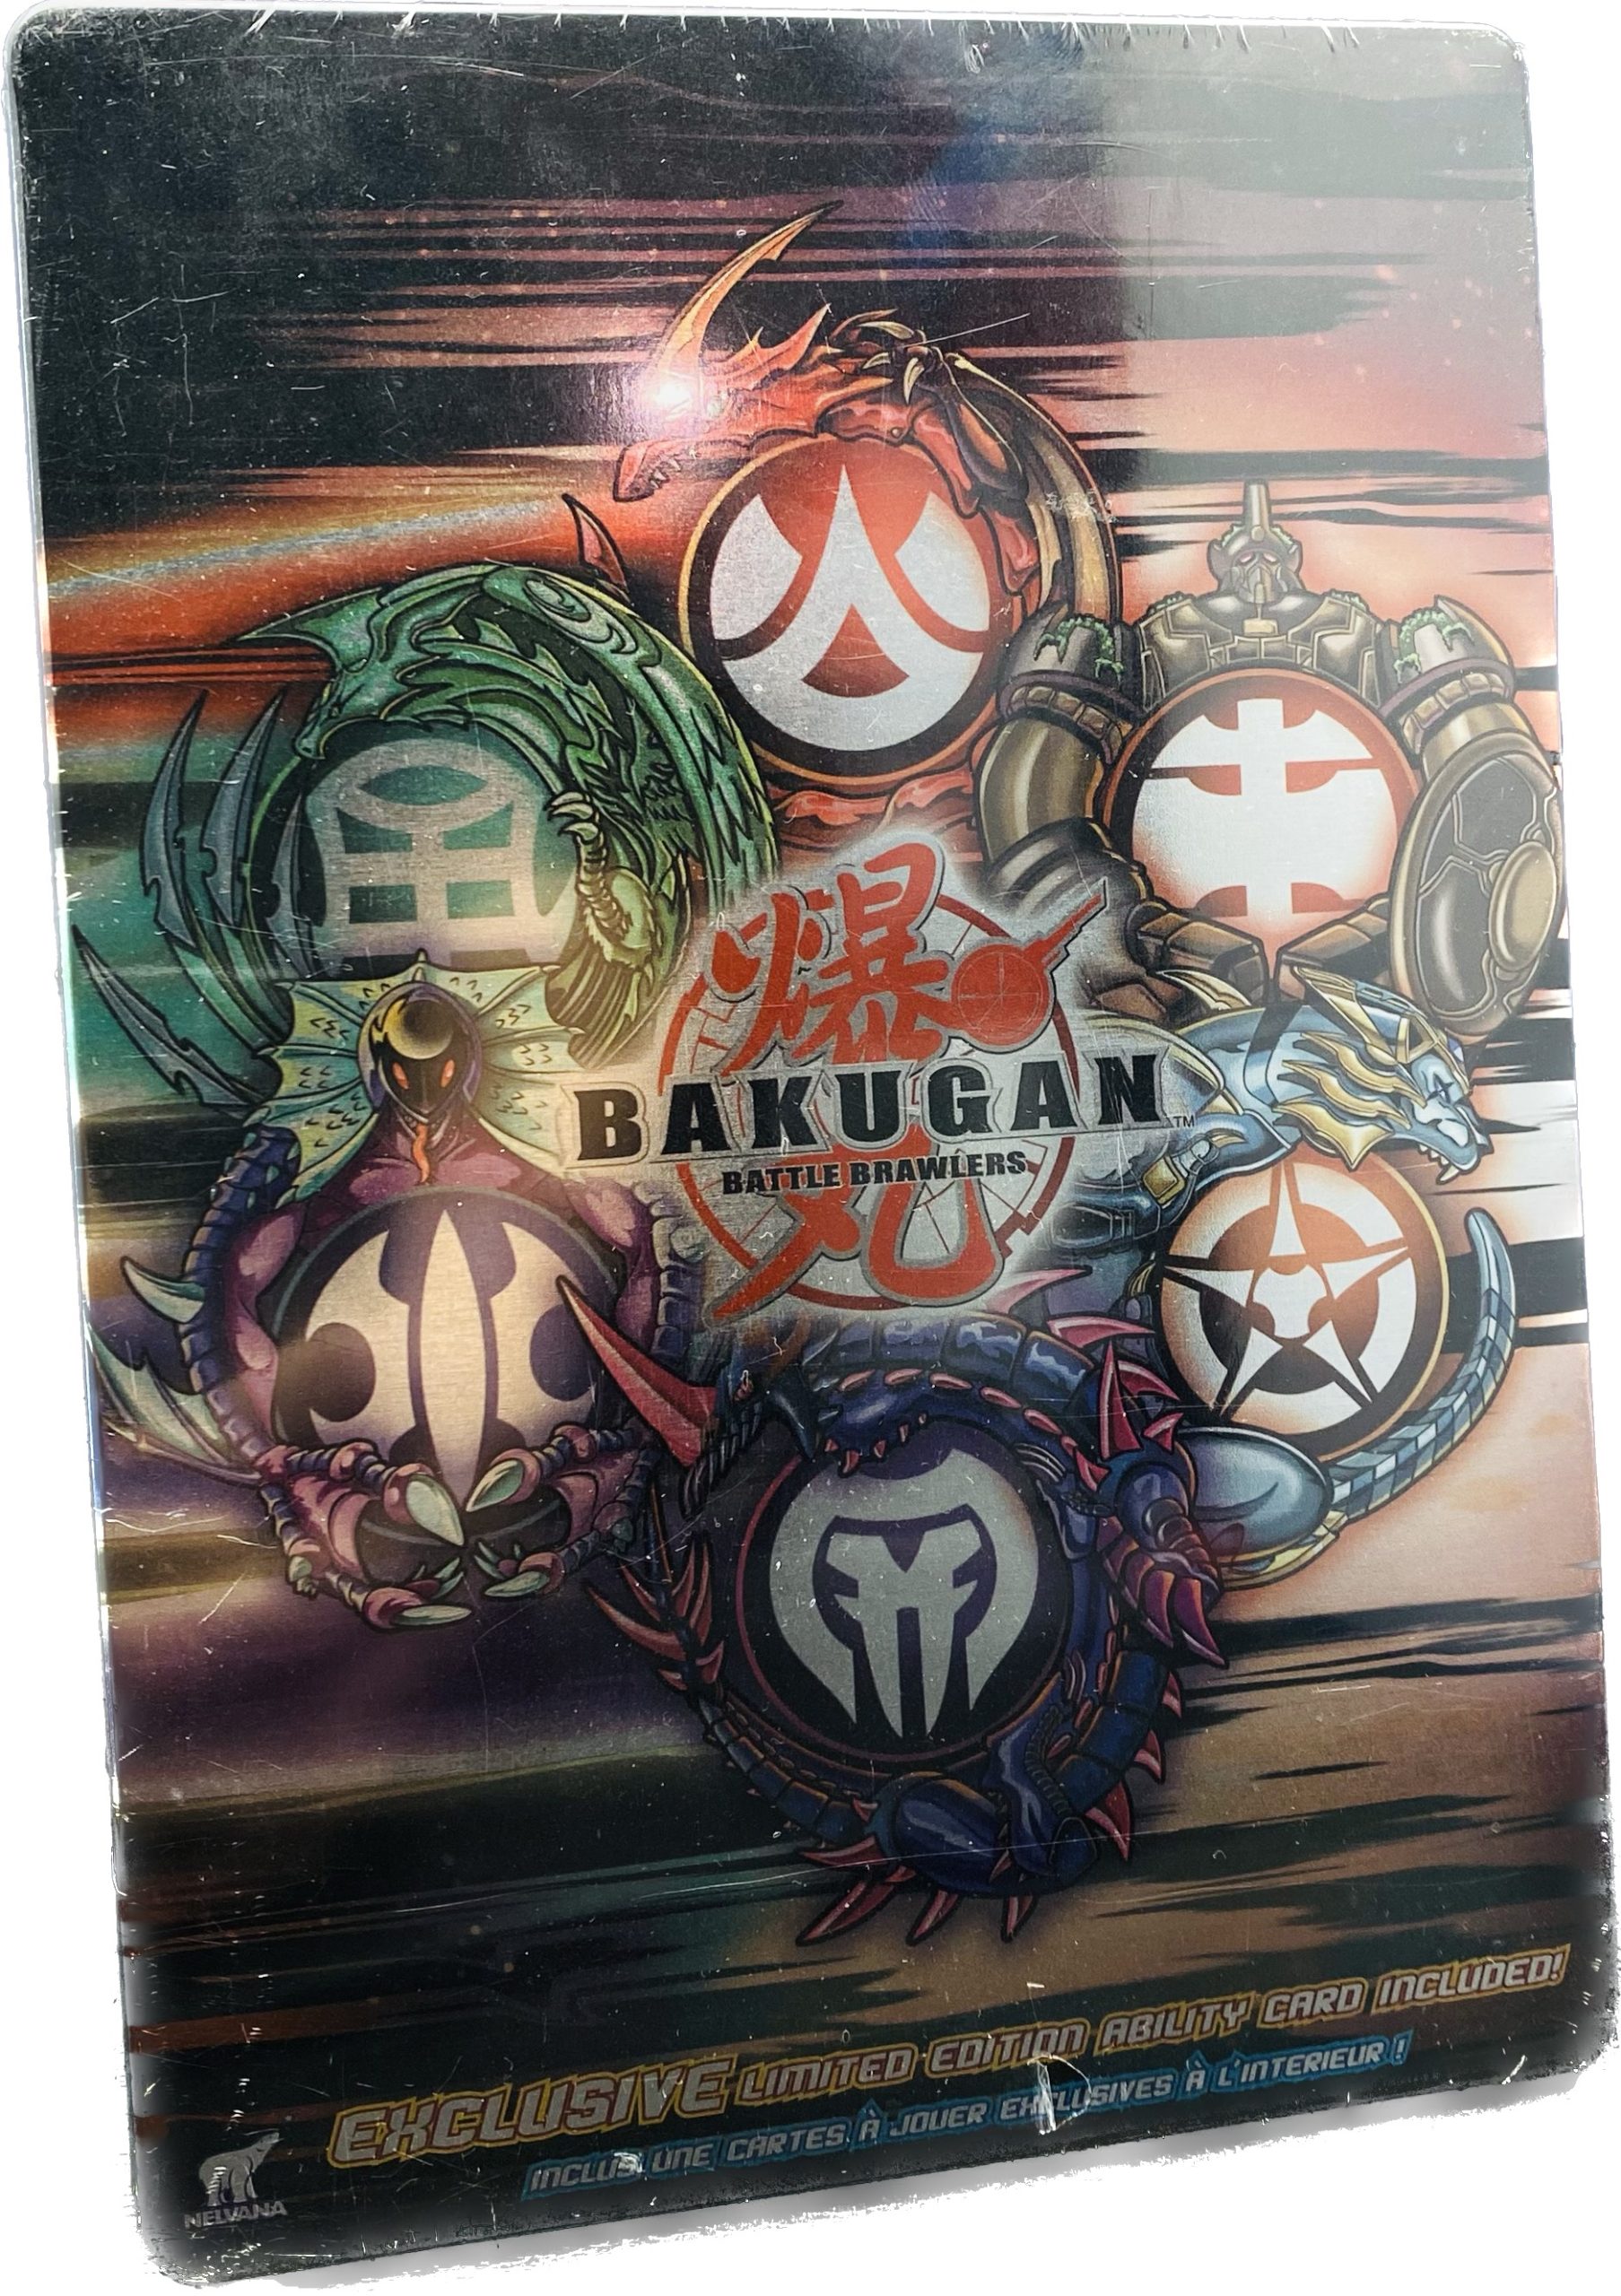 Bakugan: Battle Brawlers: Volume 1 (DVD) 